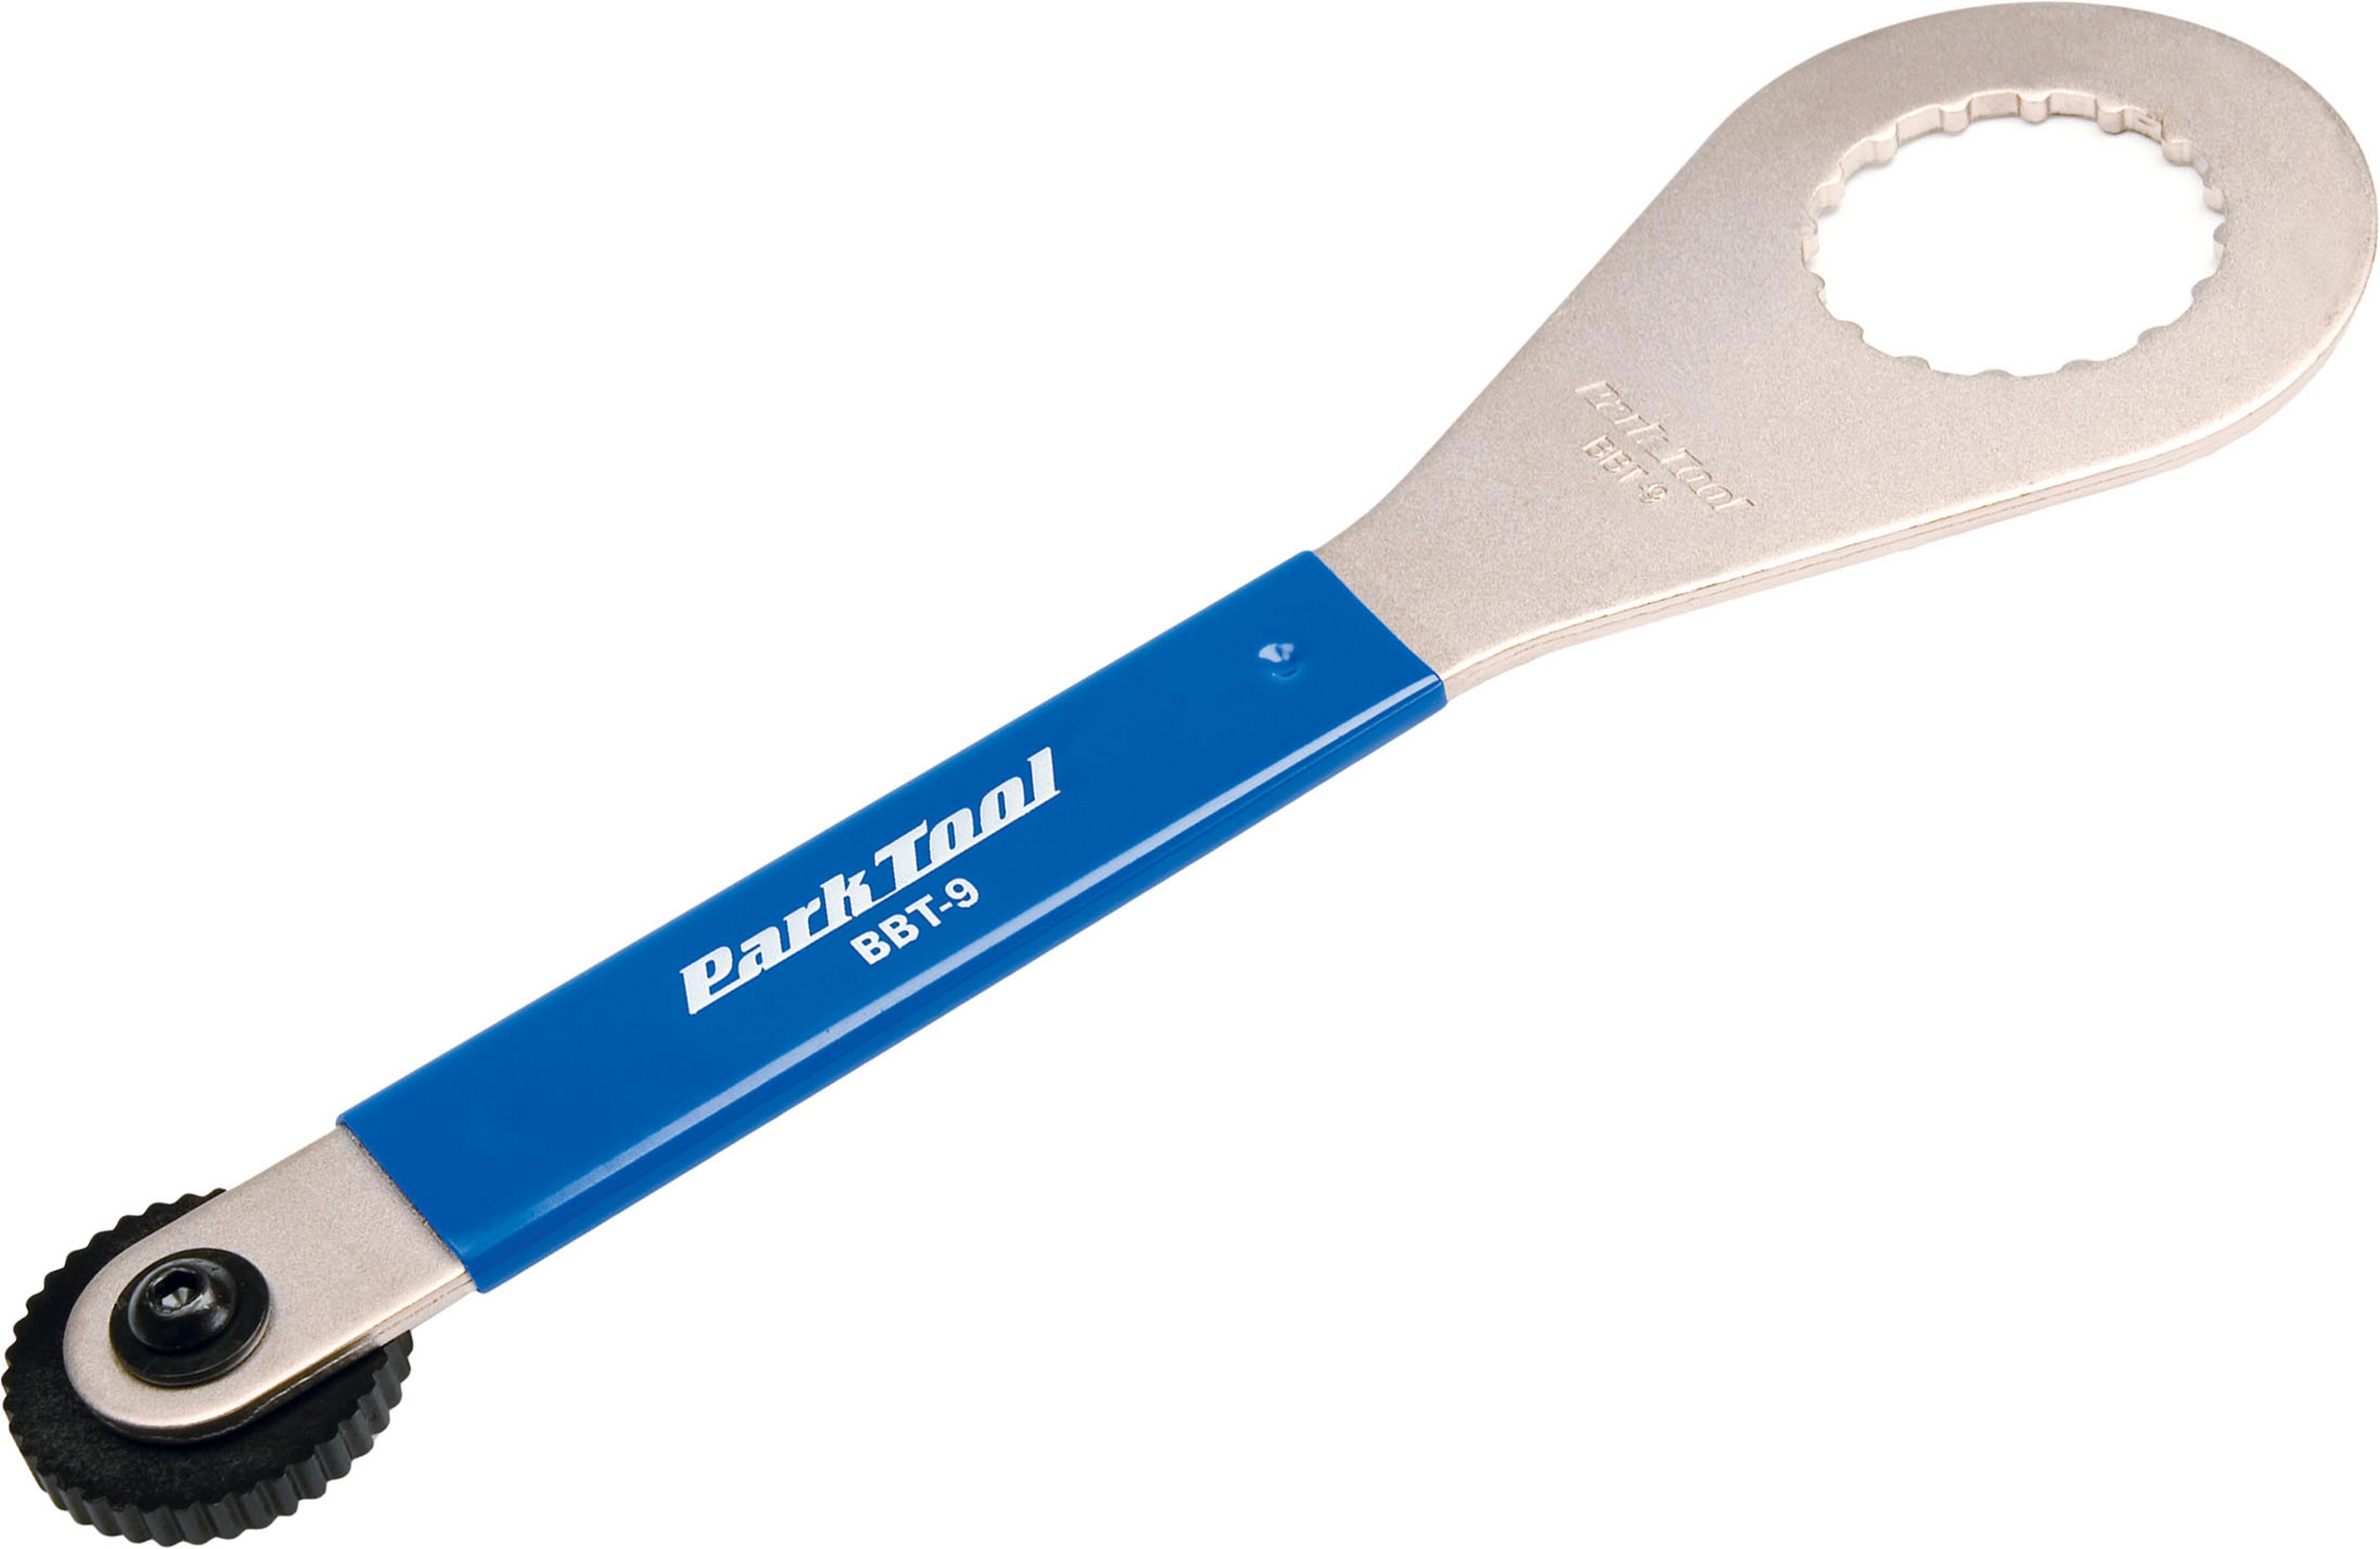 Park Tool BBT-9 bottom bracket tool – Retrogression